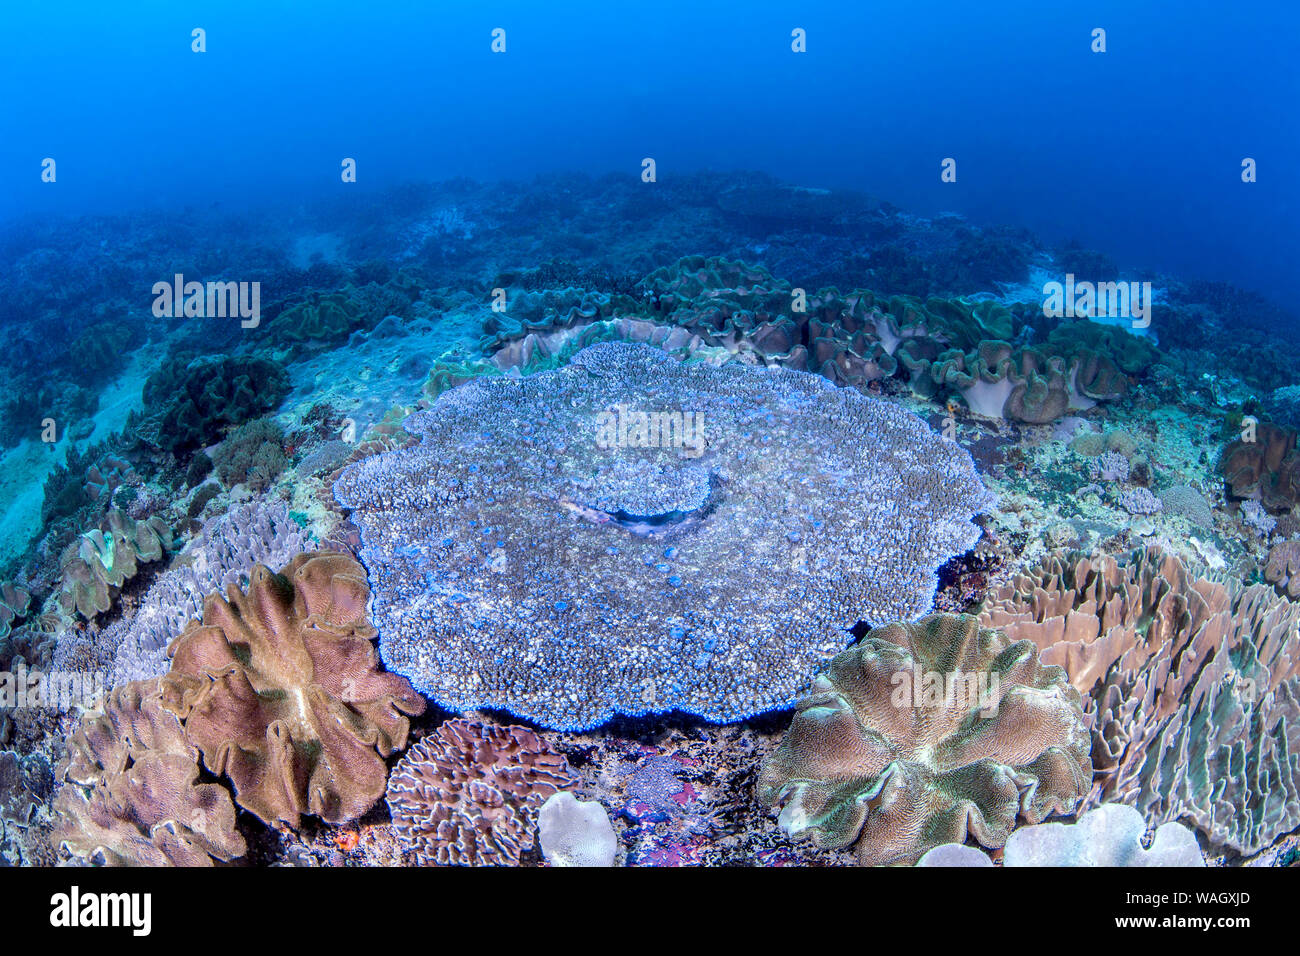 Große korallenblöcke Kolonien auf den Meeresboden in der Nähe von Nusa Lembongan Bali, Indonesien. Stockfoto